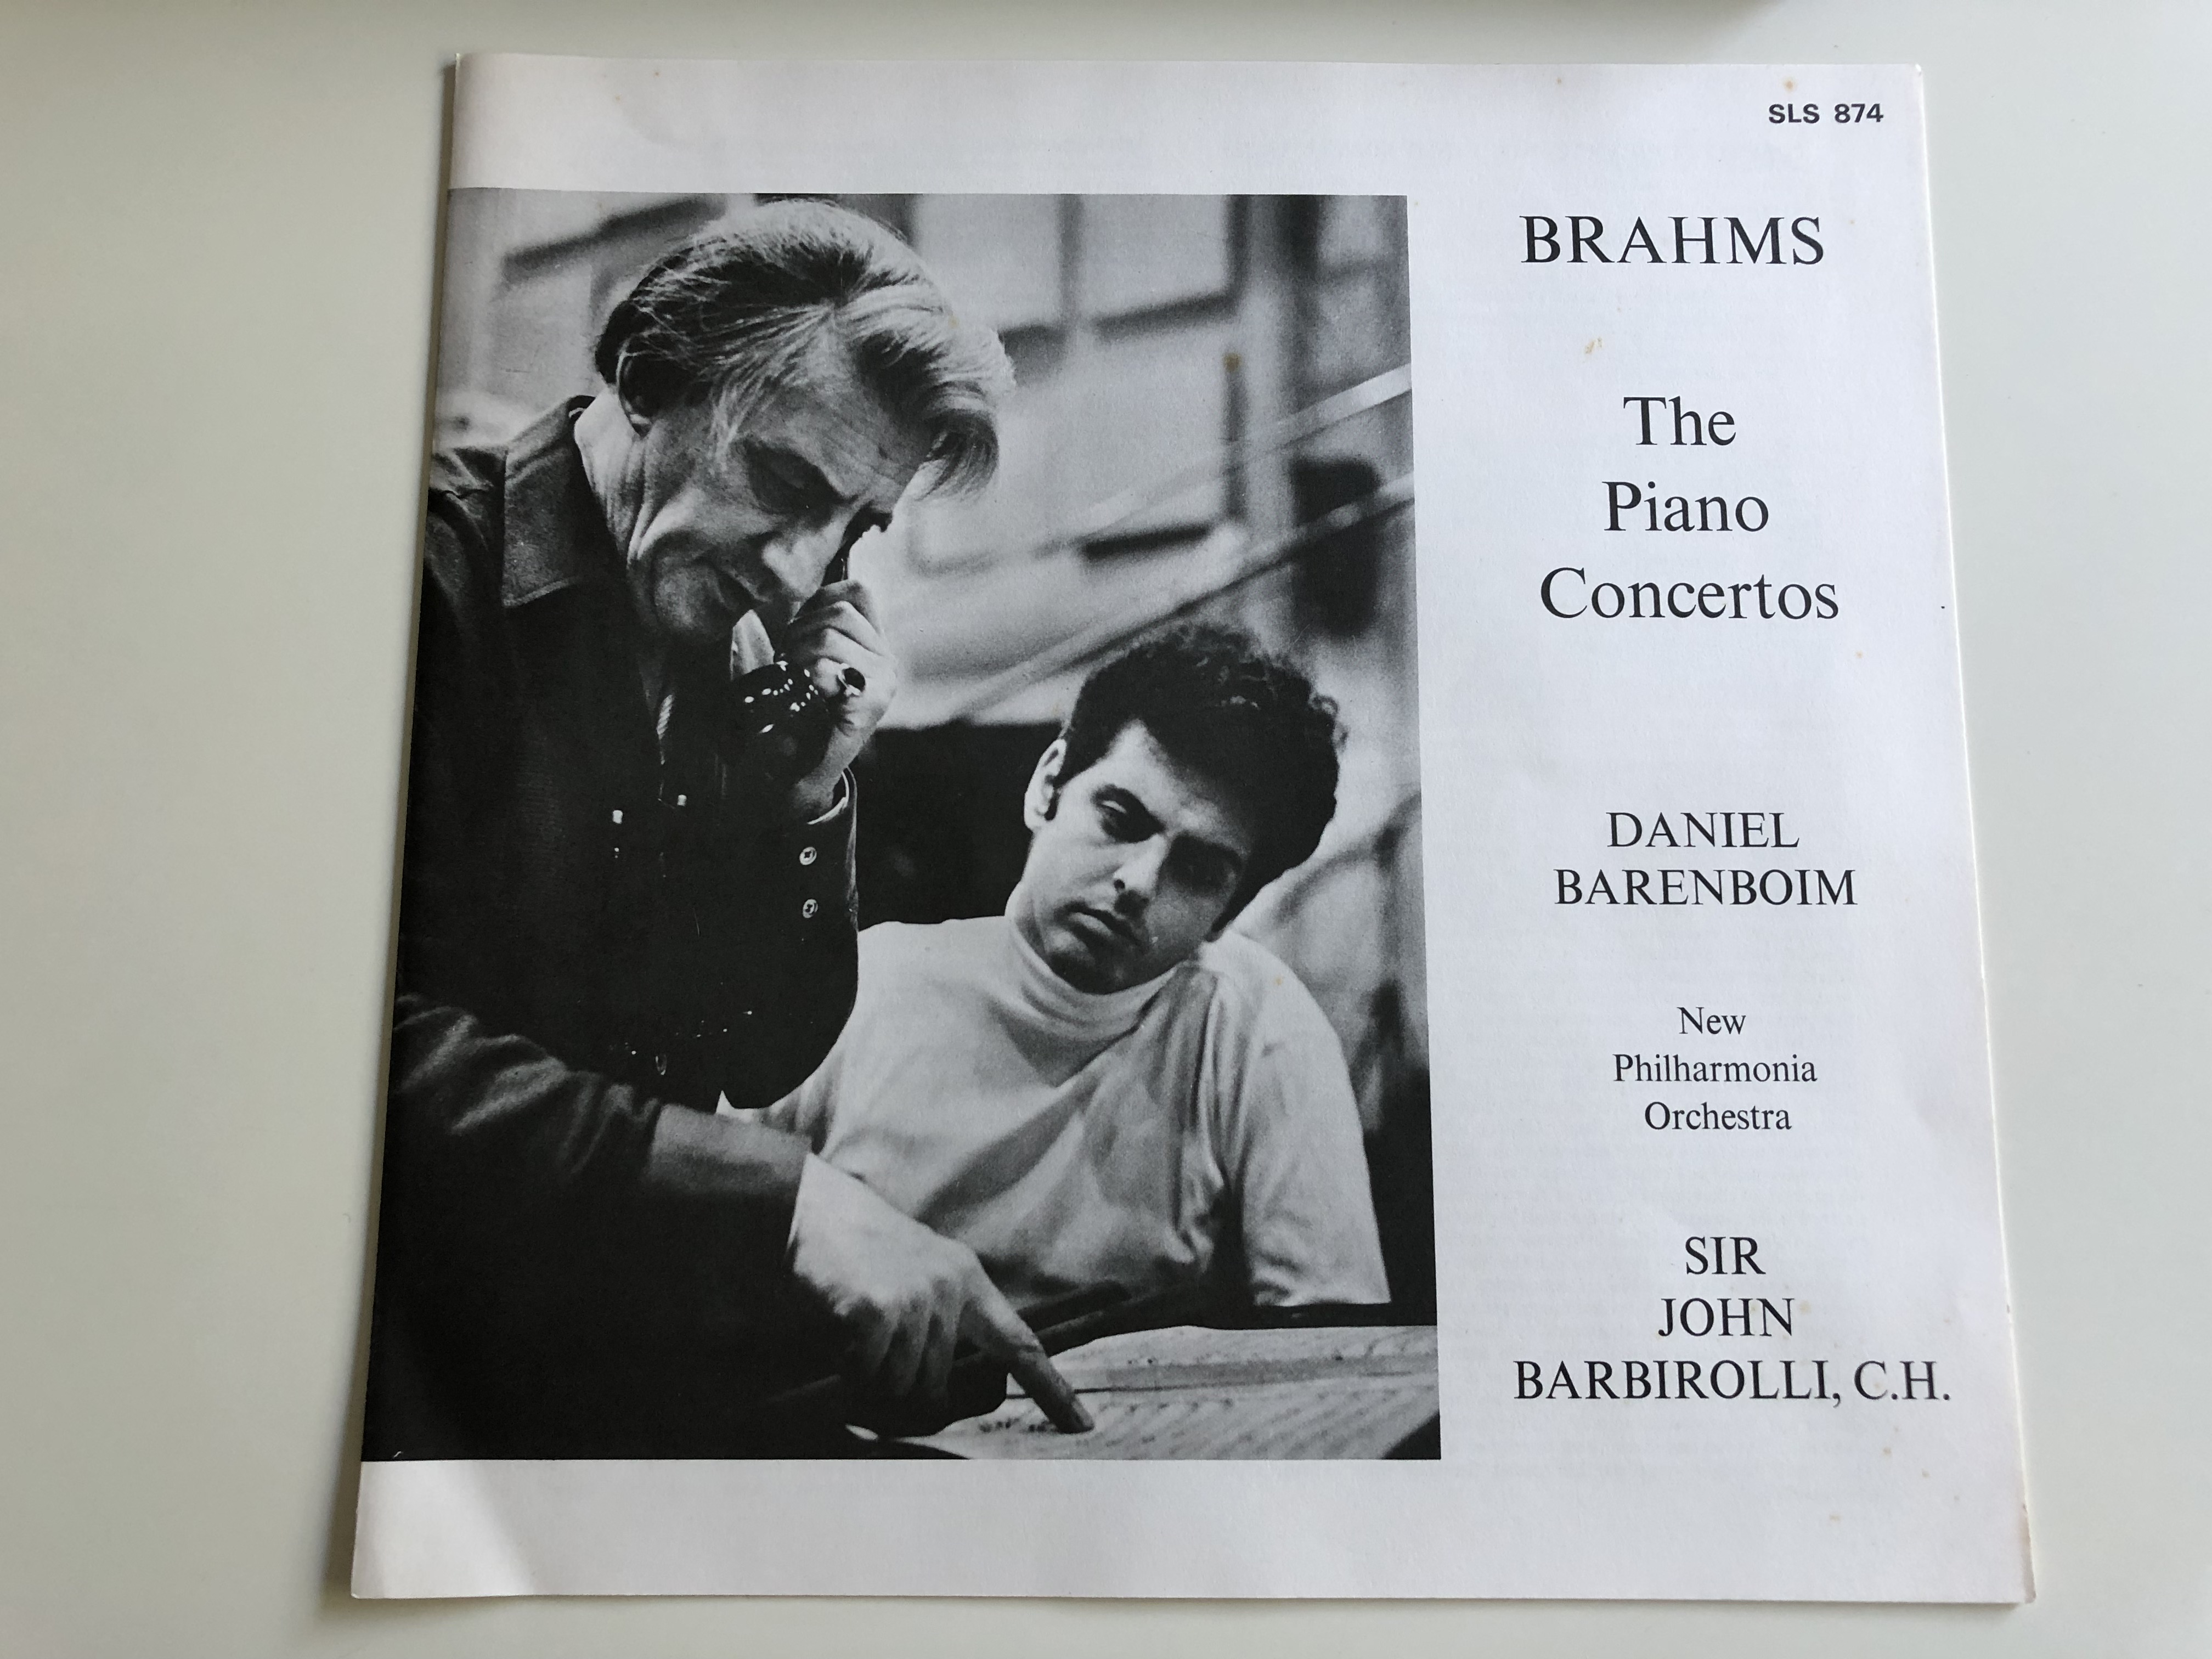 brahms-the-piano-concertos-daniel-barenboim-new-philharmonia-orchestra-conducted-sir-john-barbirolli-emi-his-master-s-voice-2x-lp-sls-874-3-.jpg